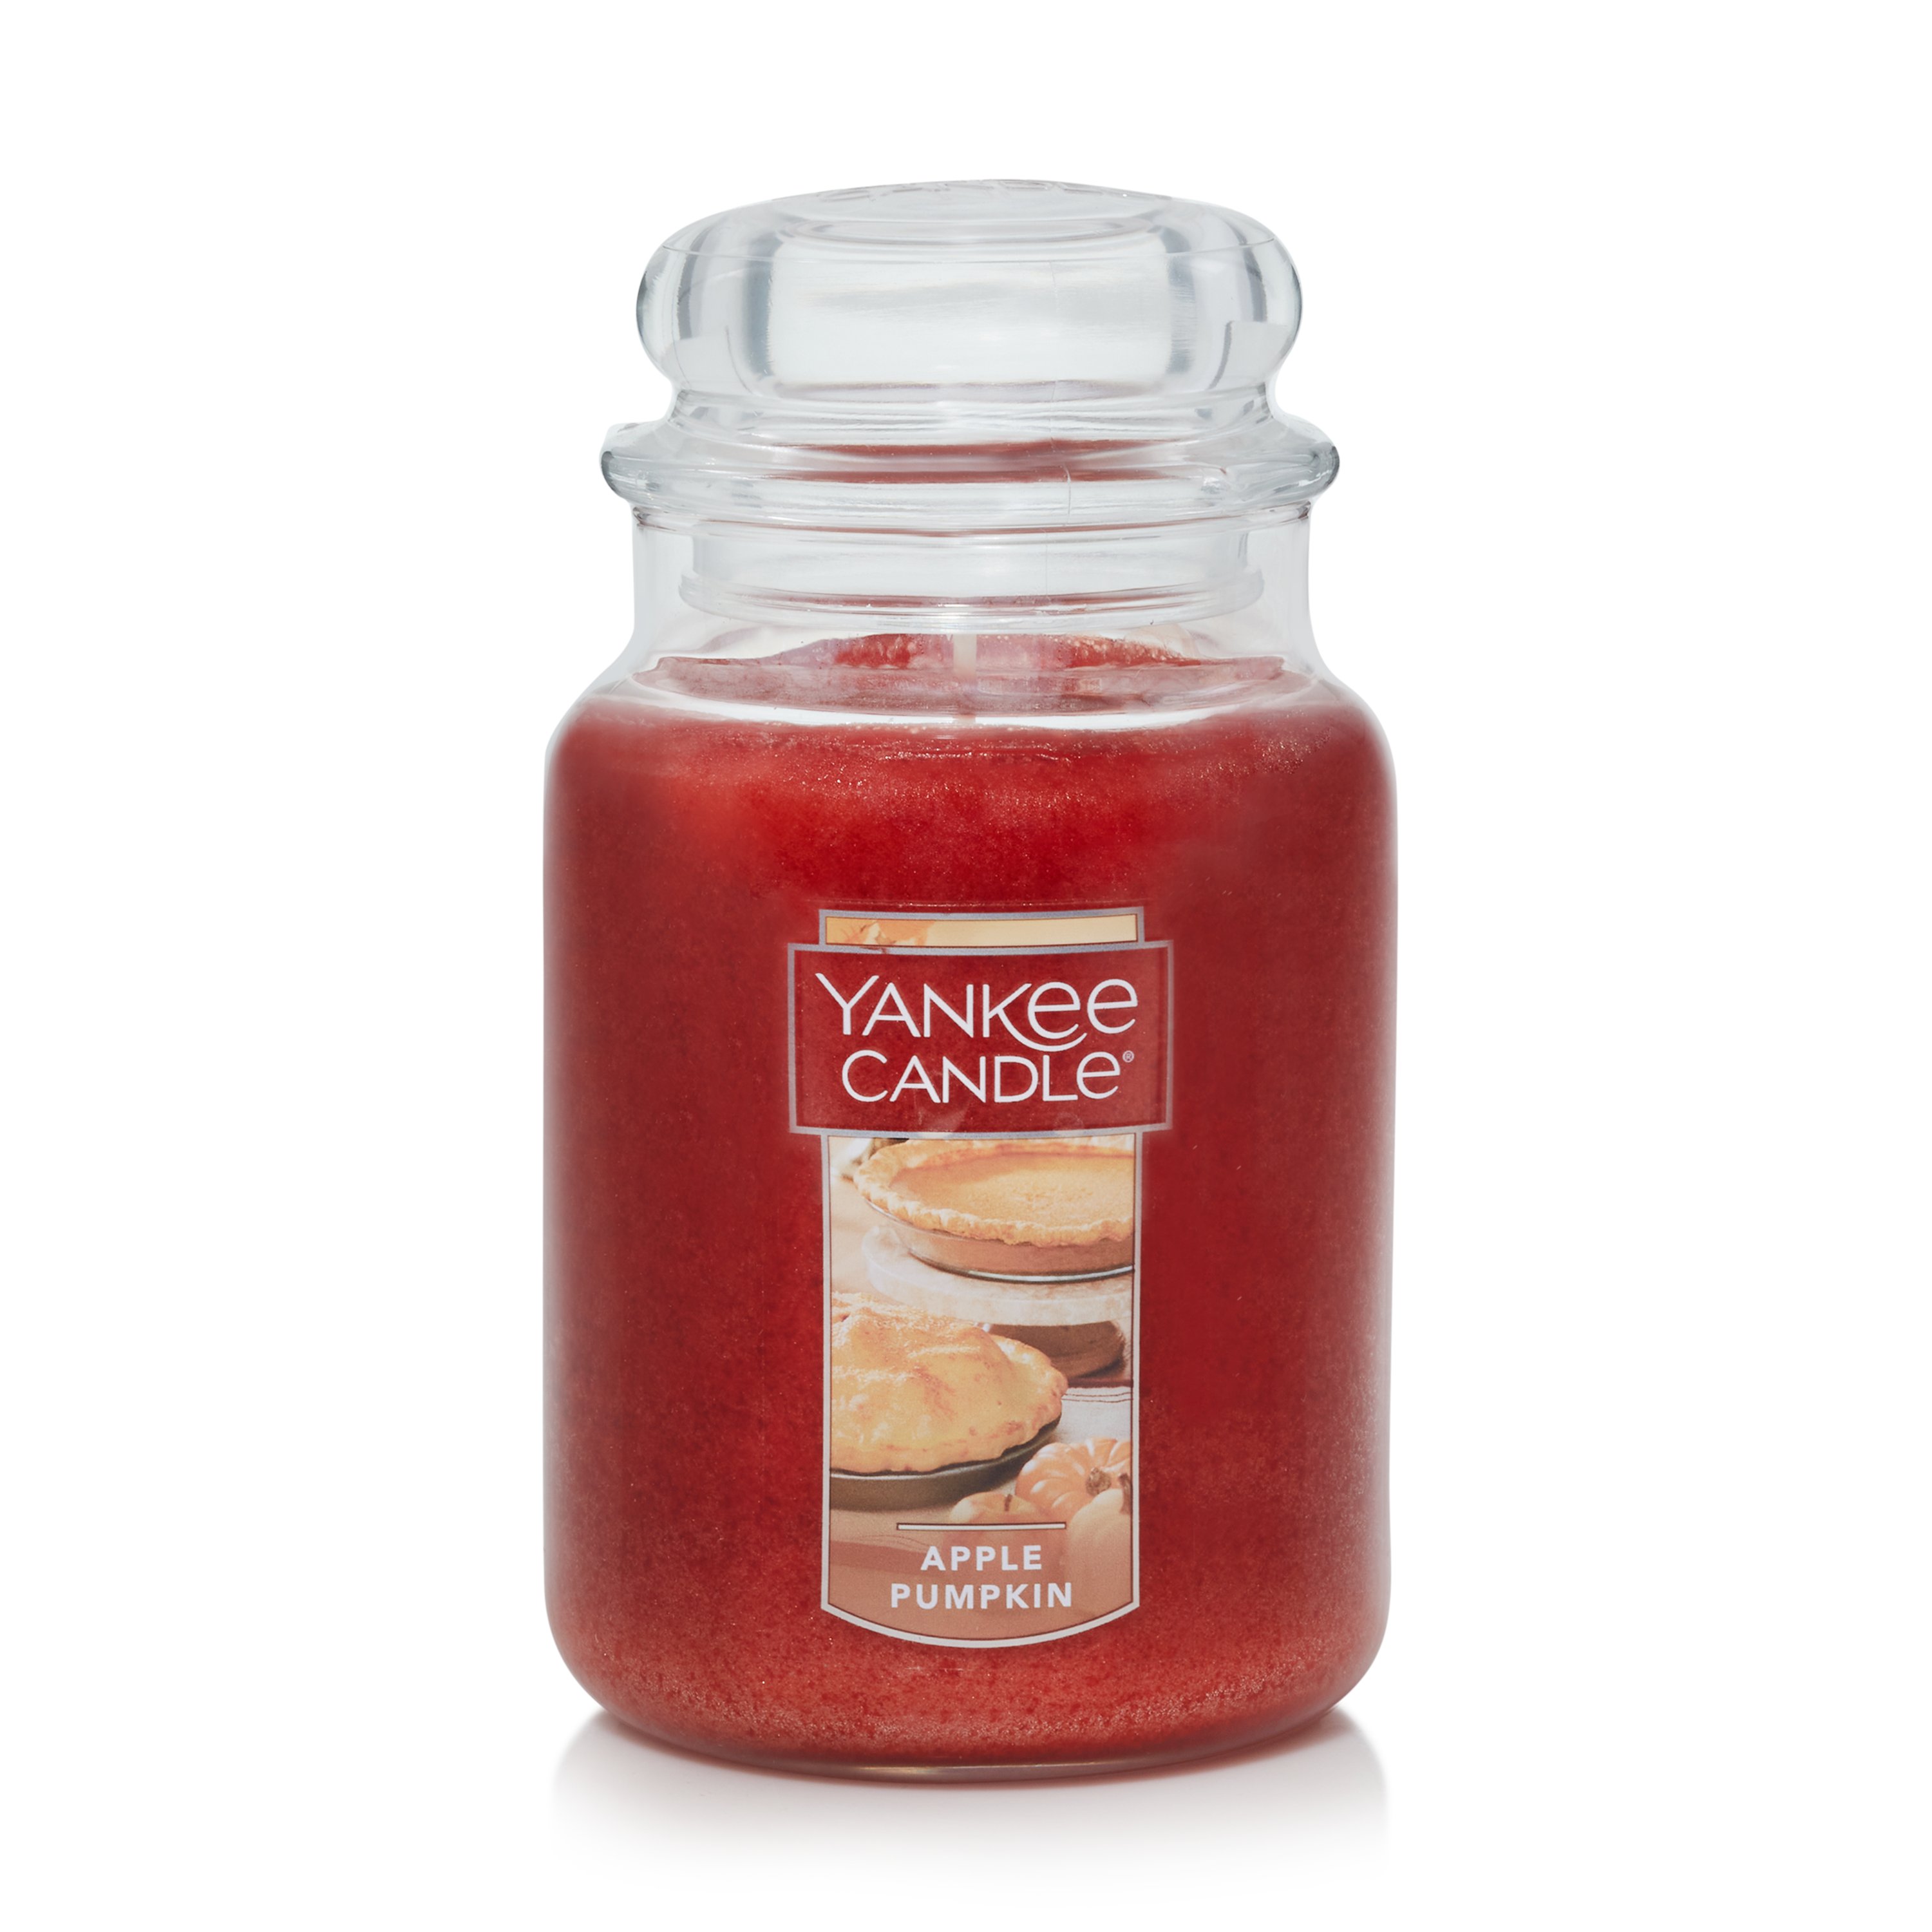 Apple Pumpkin Yankee Candle Whole Home Air Freshener 10.5 g Fragrance